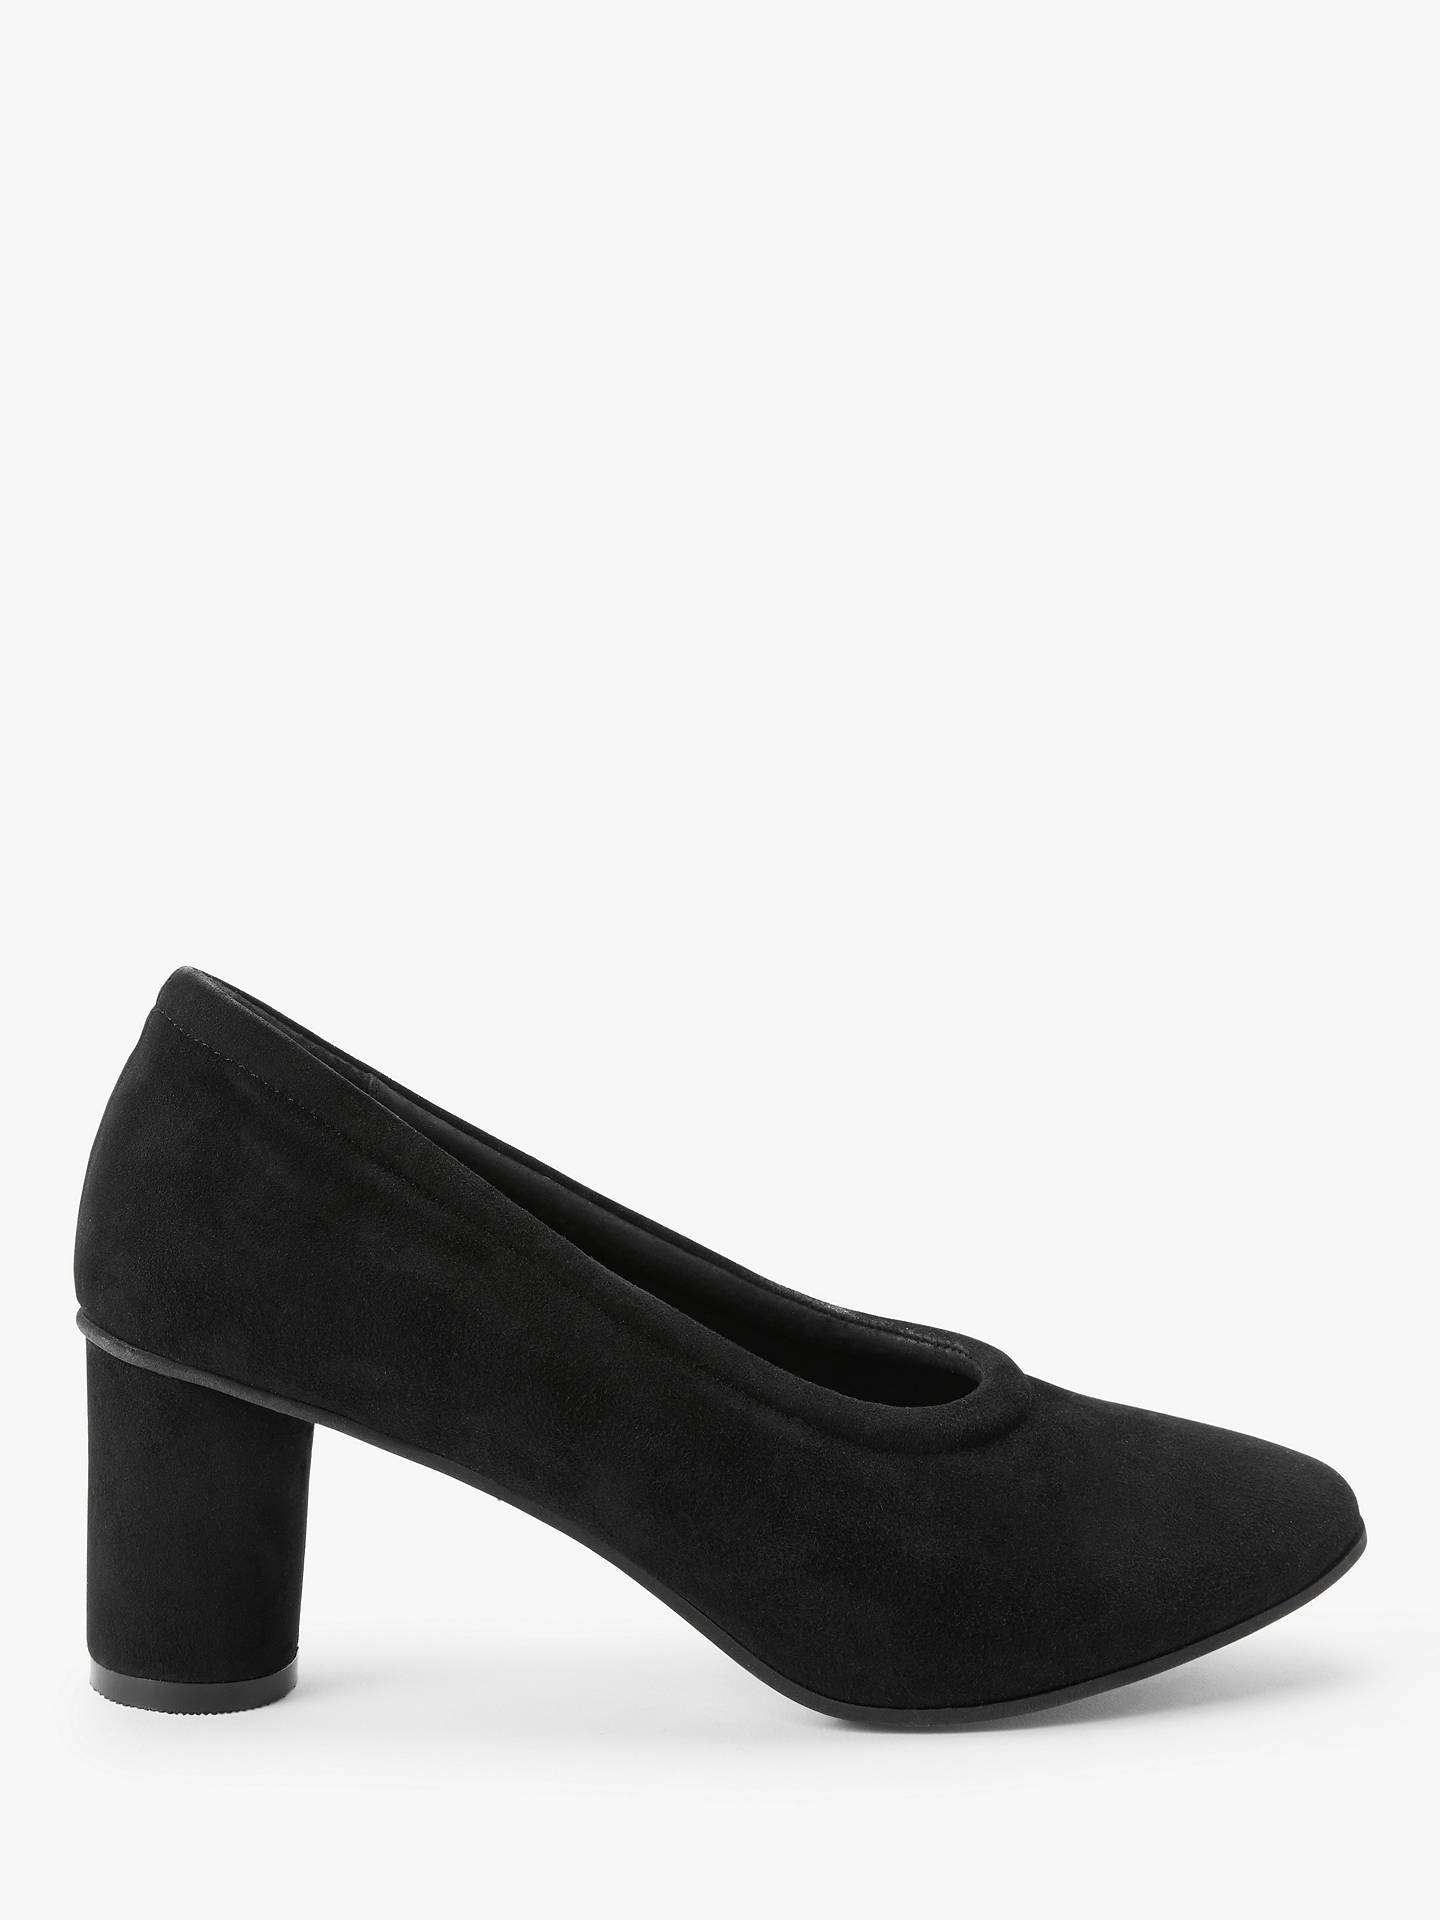 Kin Alisha Suede Cone Heel Court Shoes, Black at John Lewis & Partners